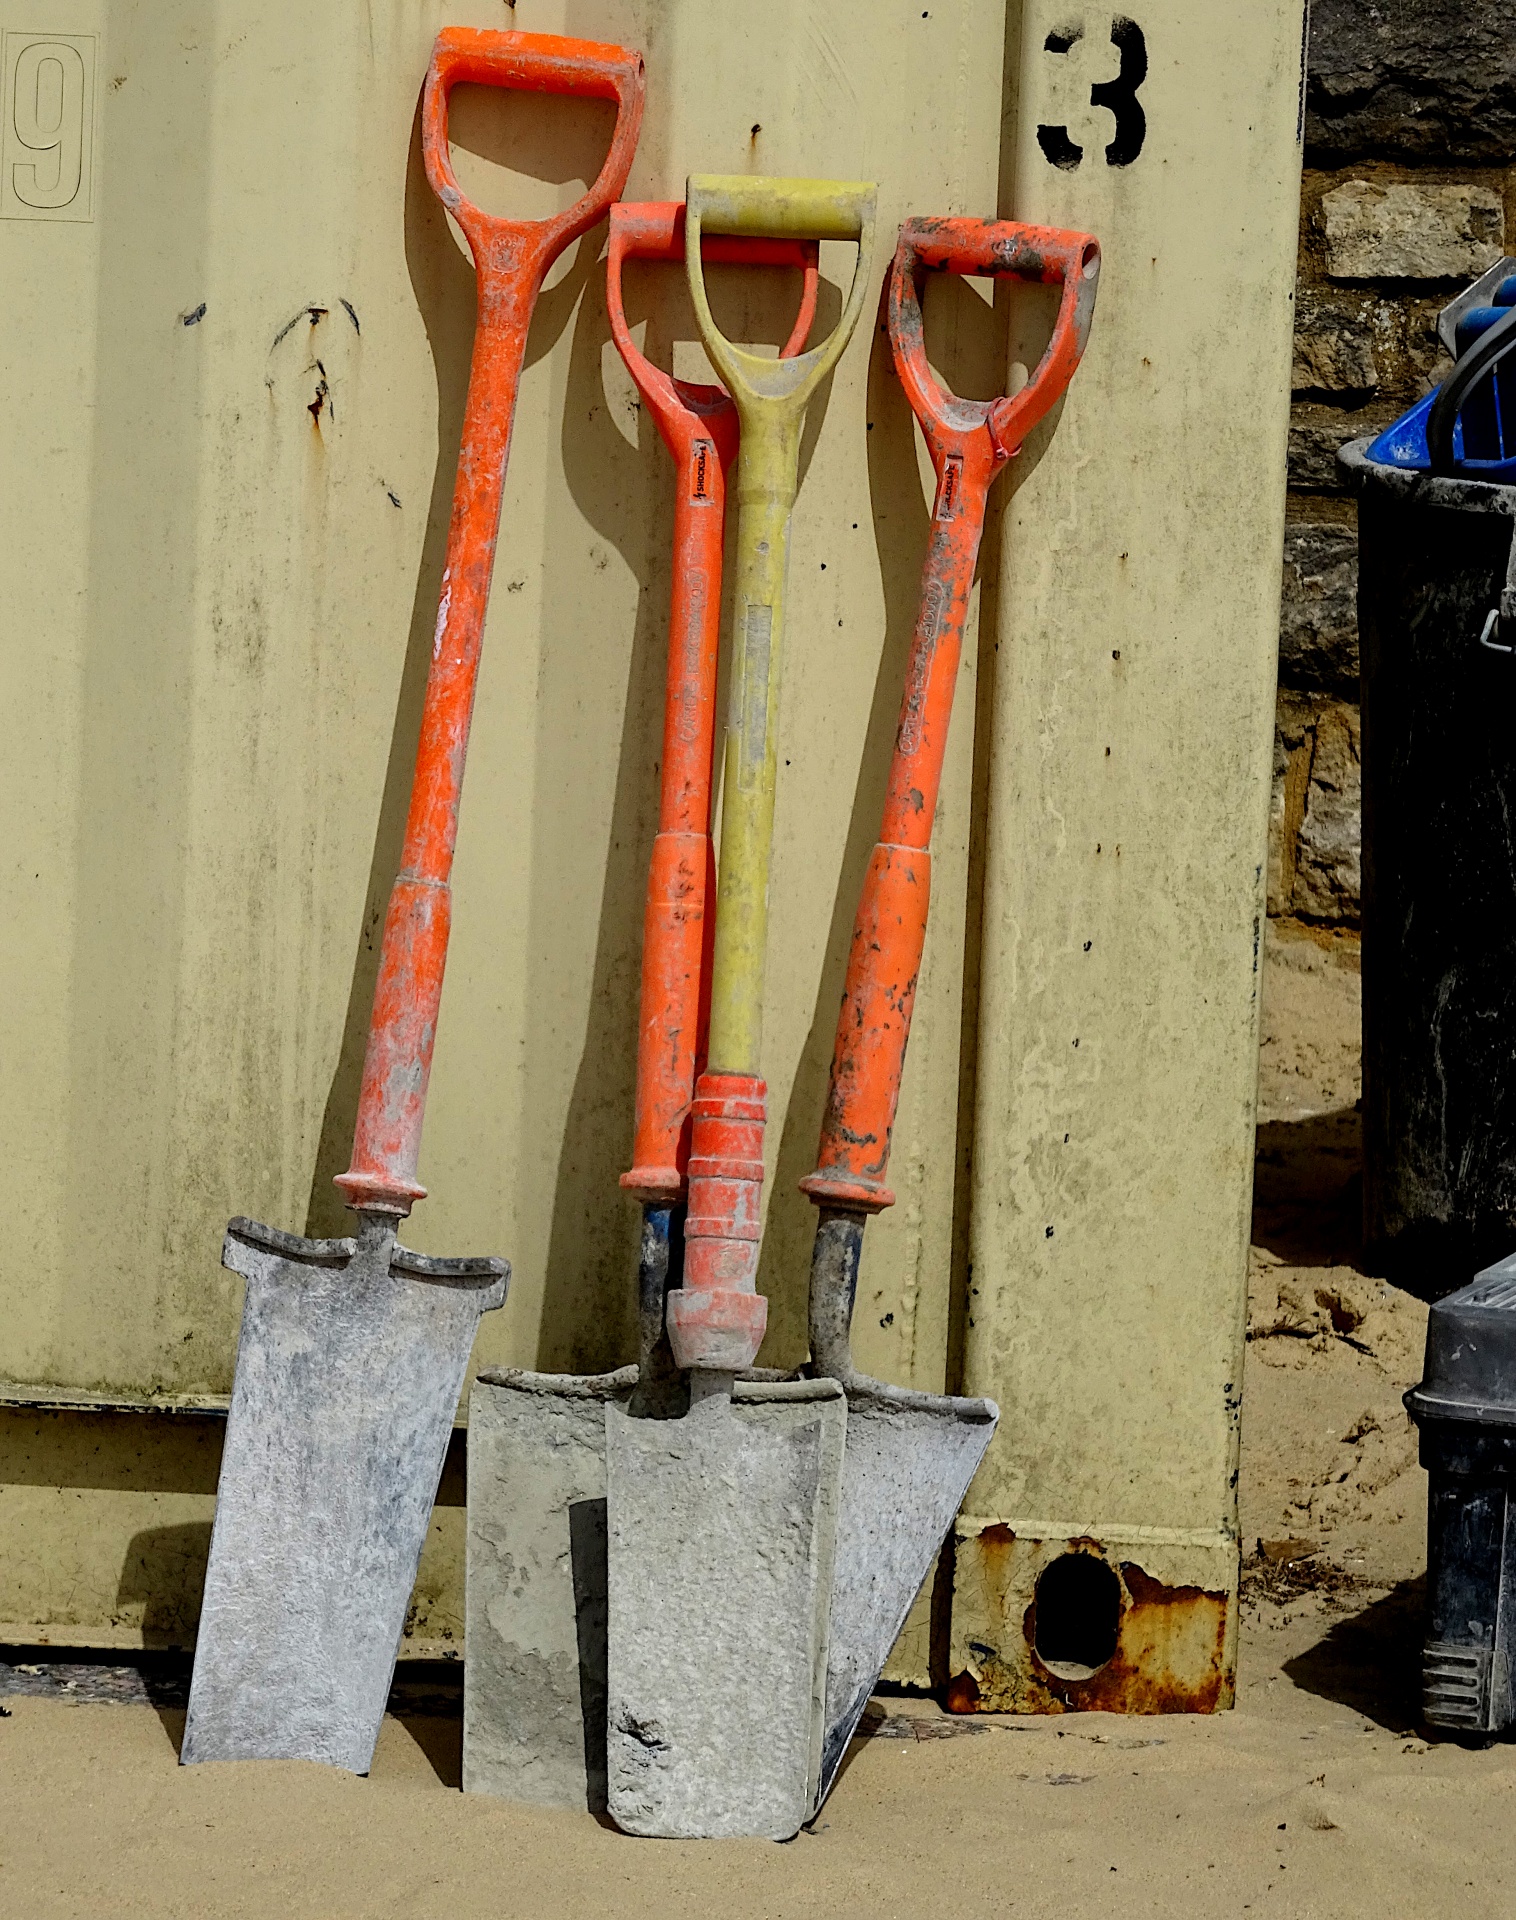 Construction Site Workers Shovels